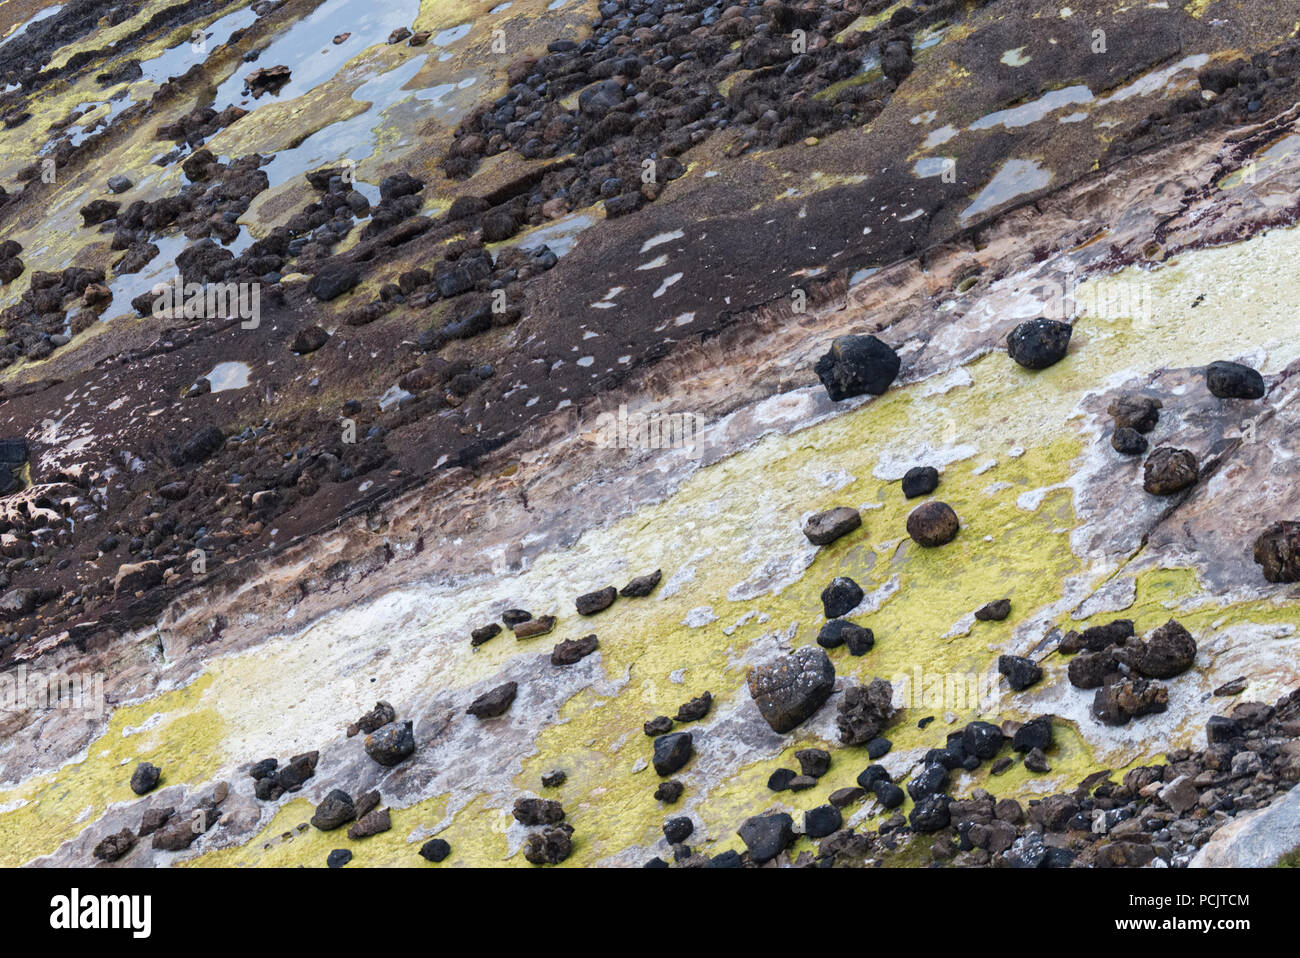 Concretions on Laig shore, Isle of Eigg Stock Photo